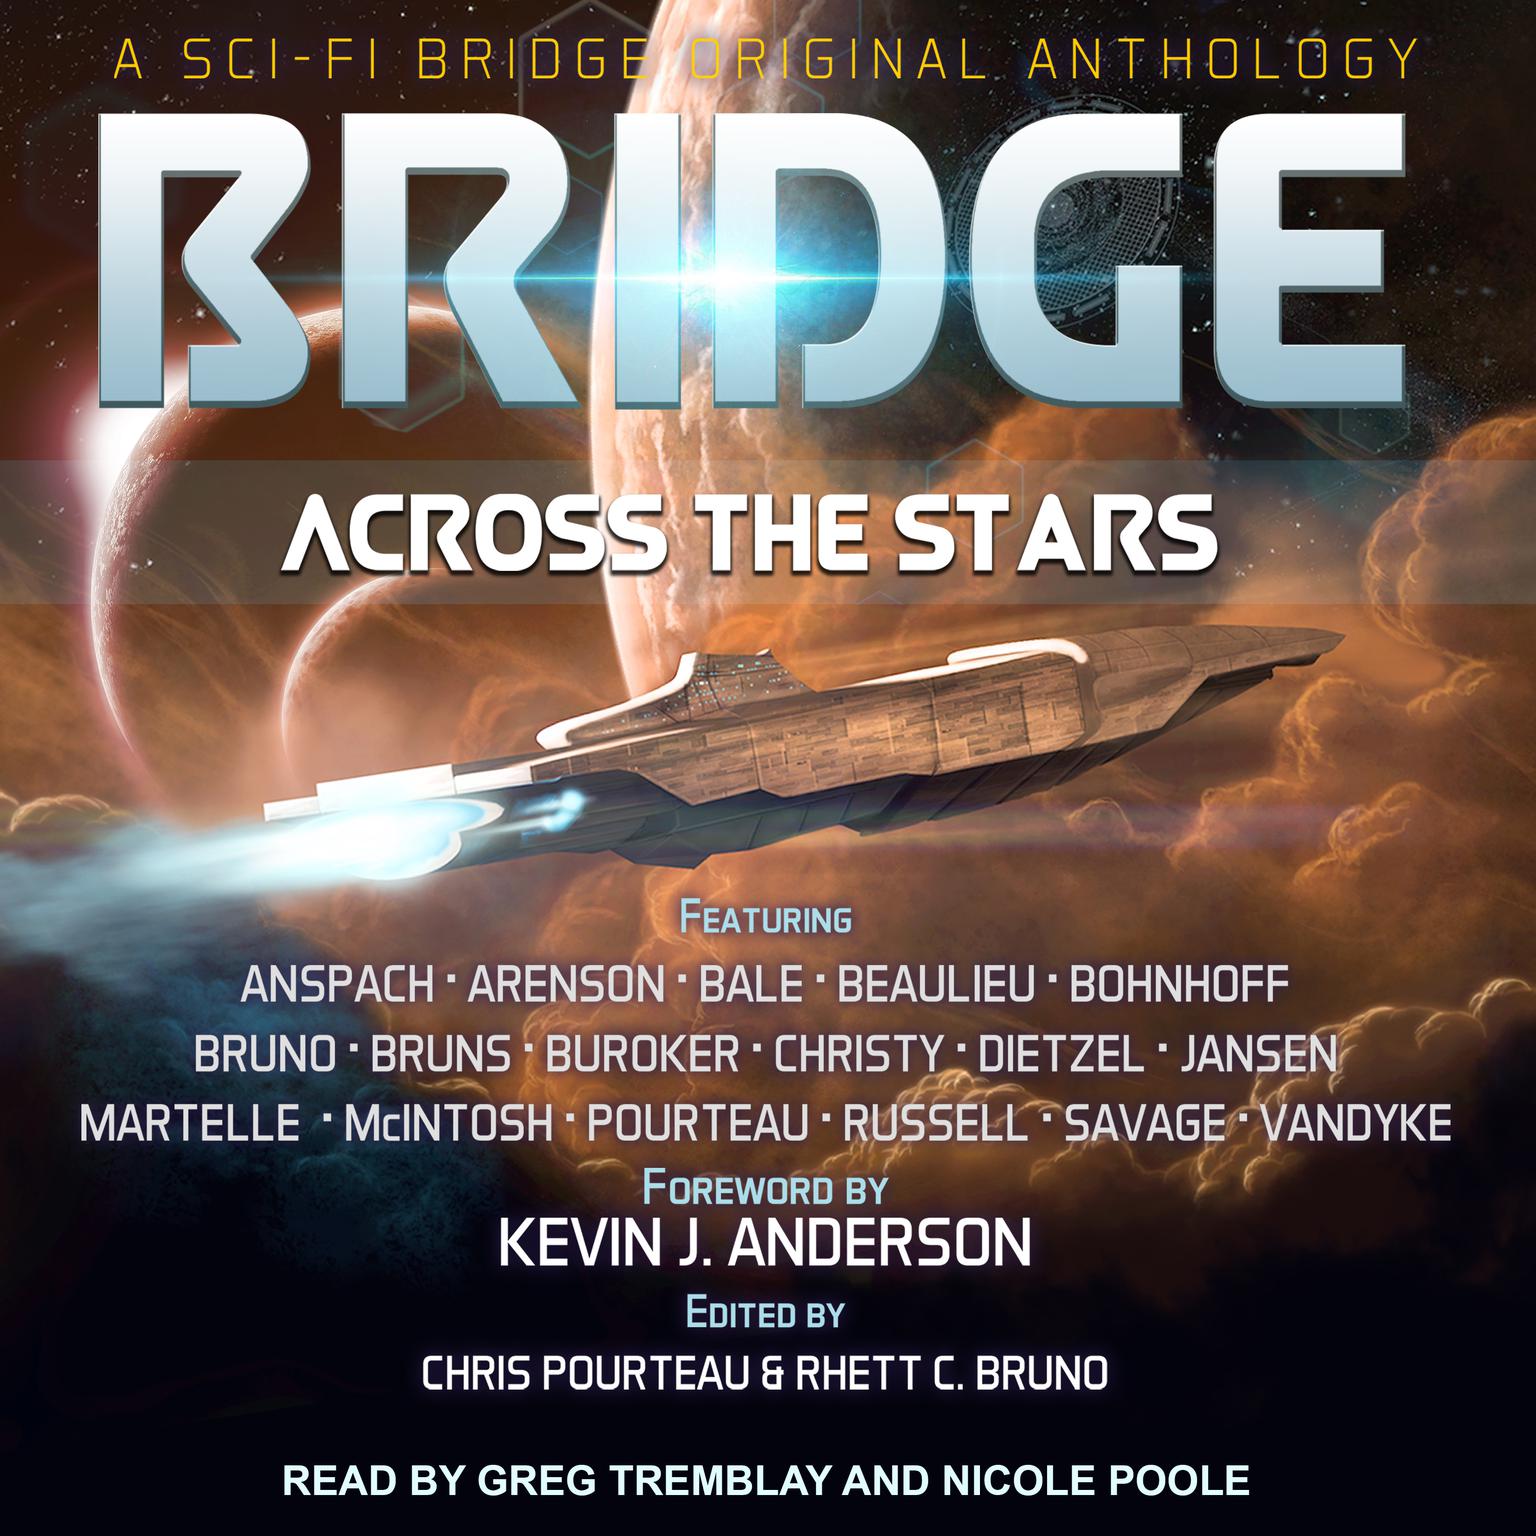 Bridge Across the Stars: A Sci-Fi Bridge Original Anthology Audiobook, by Will McIntosh